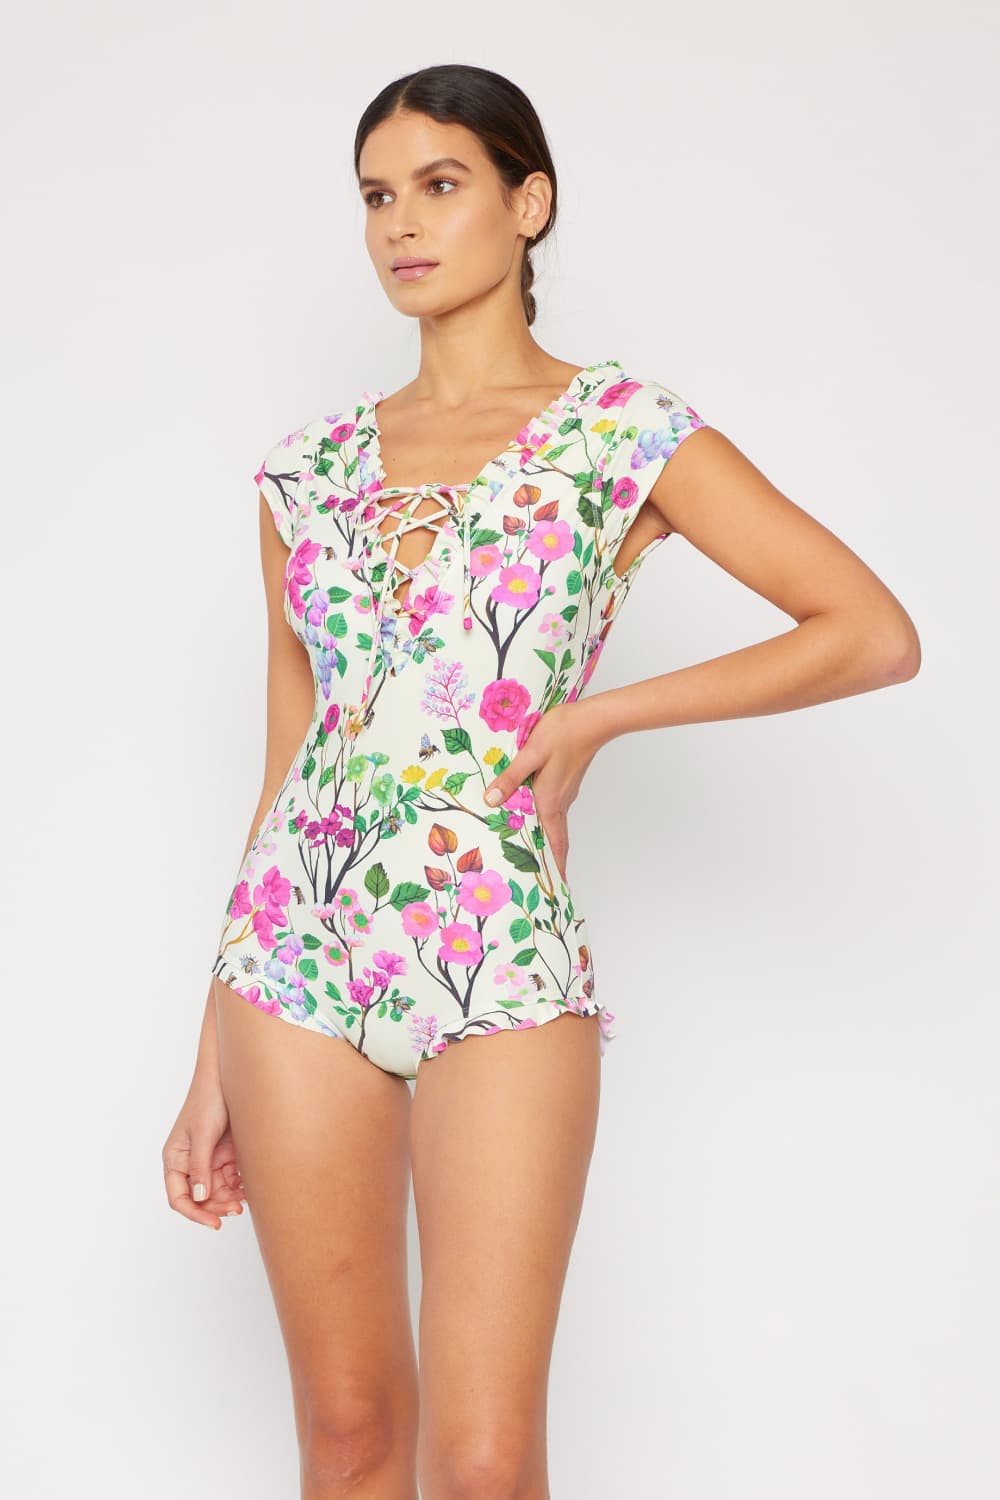 Marina West Swim Bring Me Flowers V-Neck One Piece Swimsuit Cherry Blossom  Cream - Floral / S